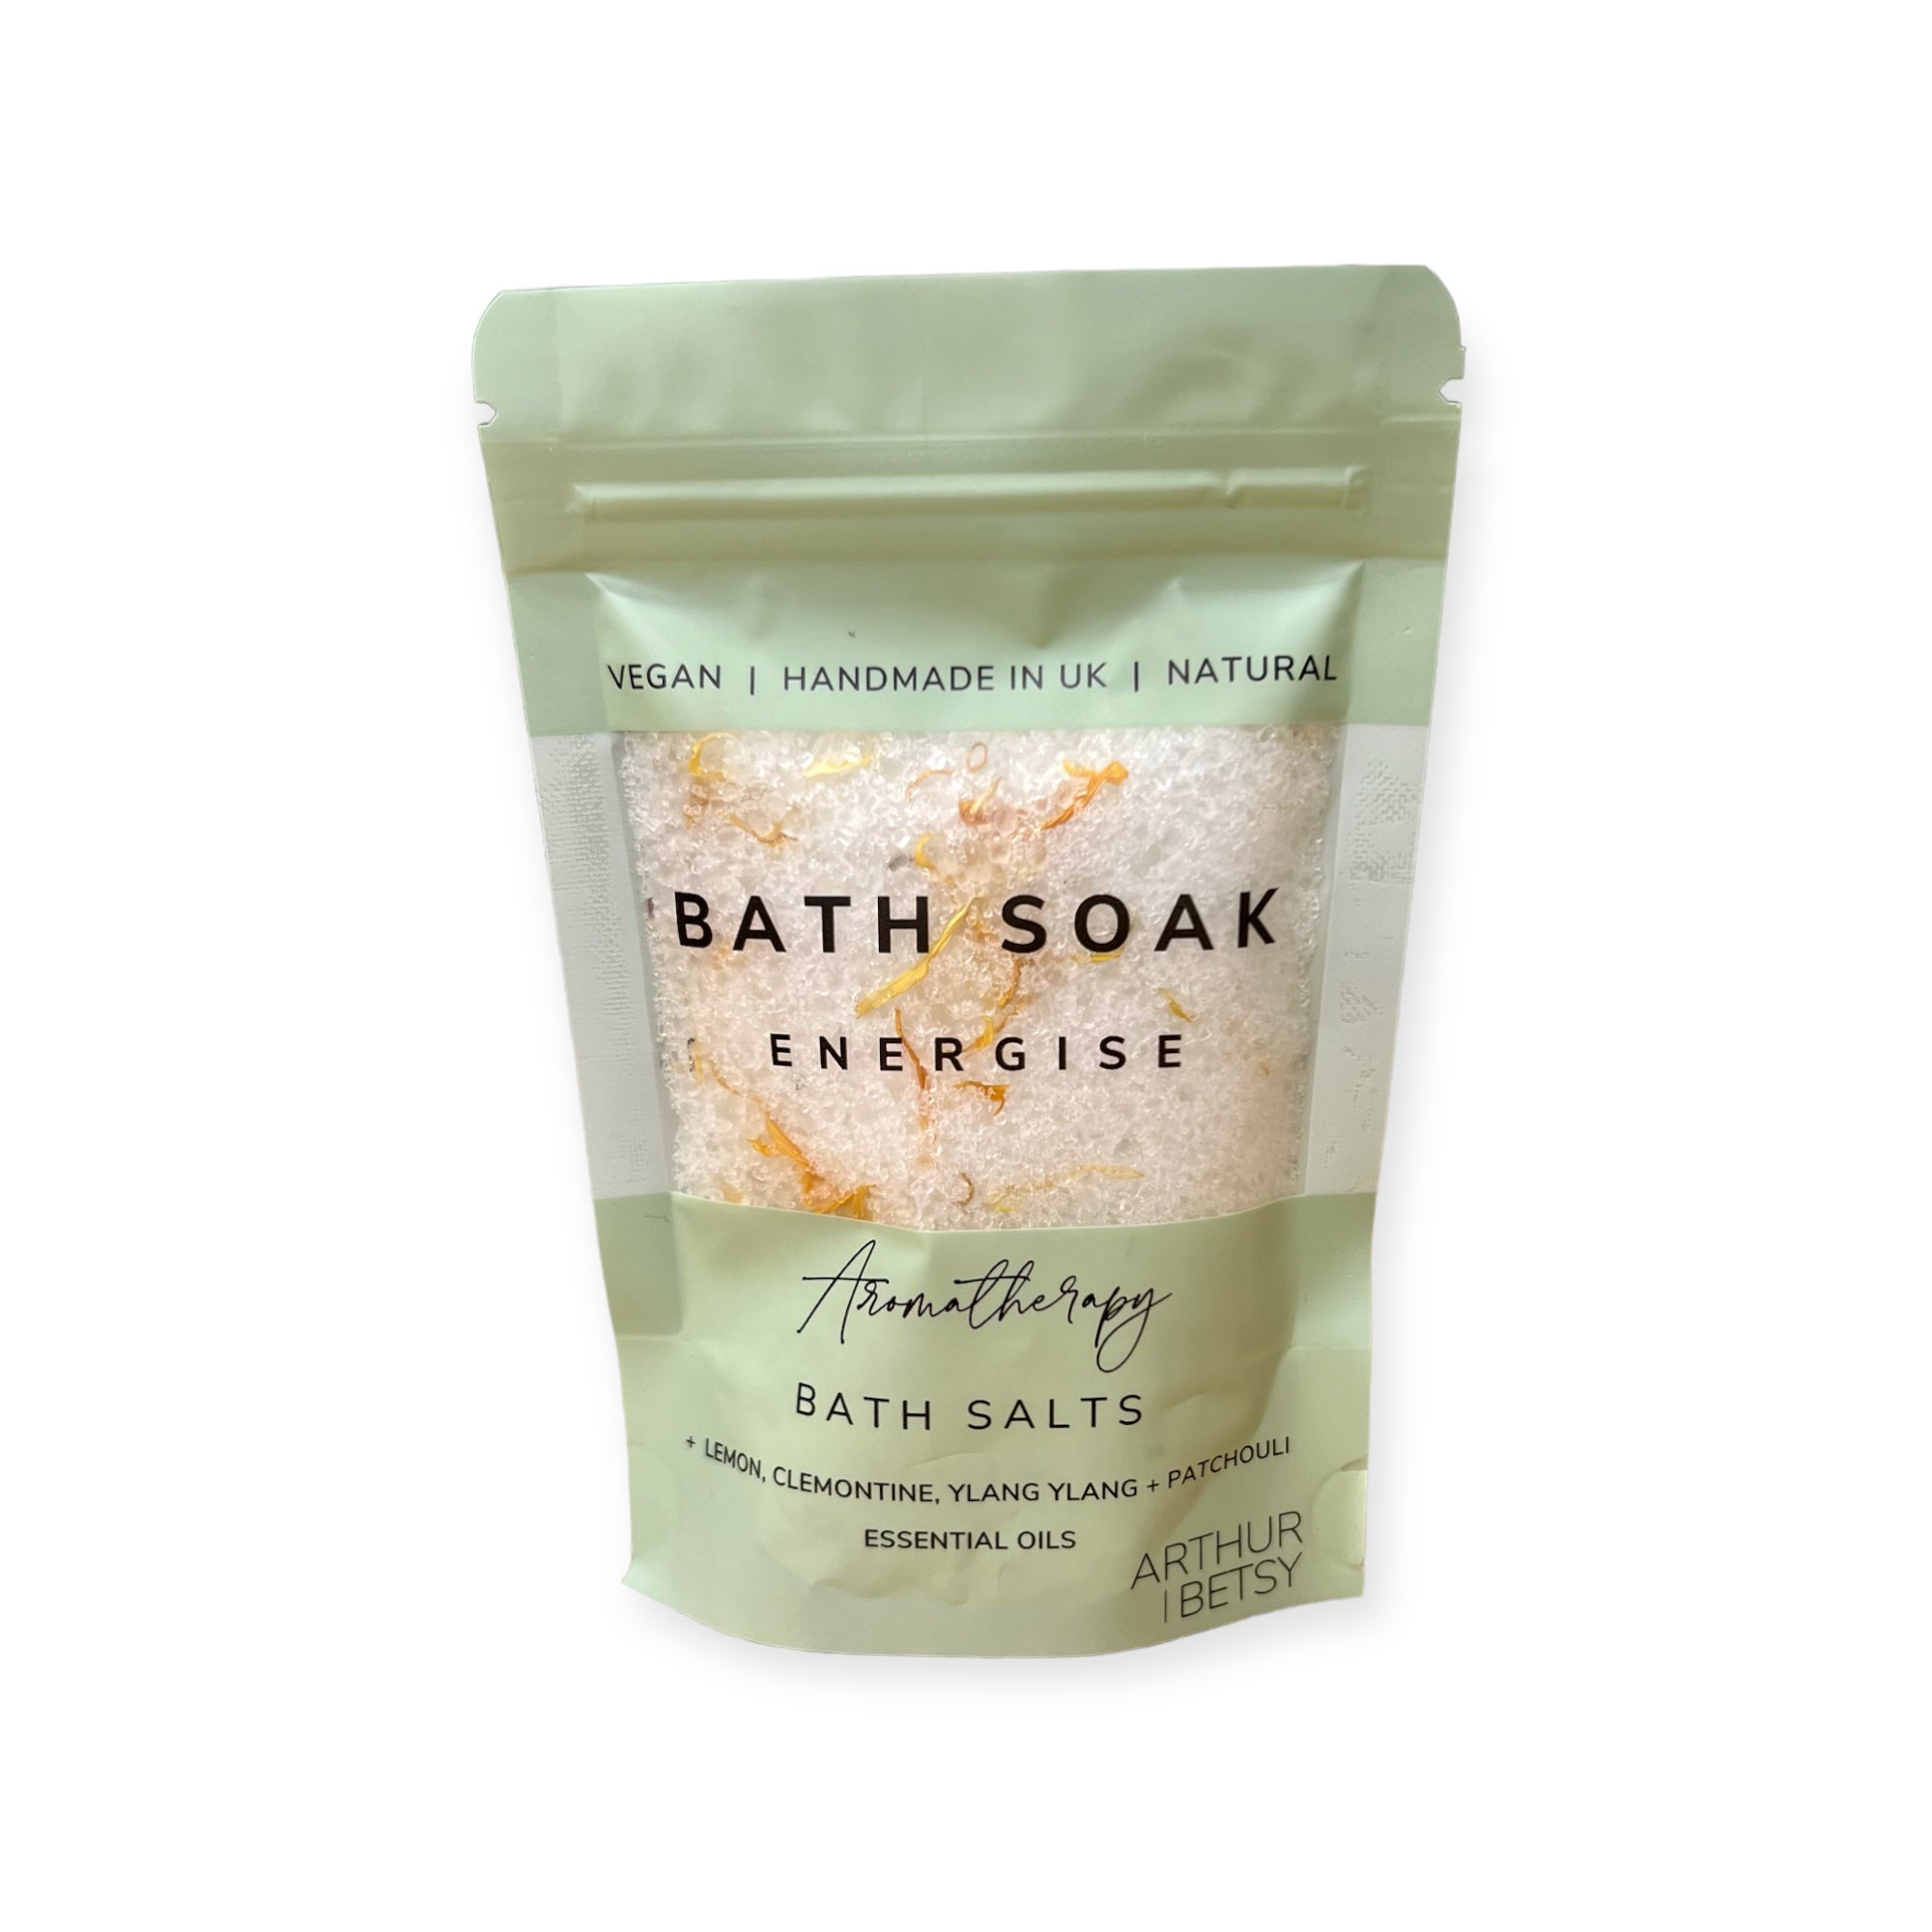 Energise aromatherapy bath salts 60g